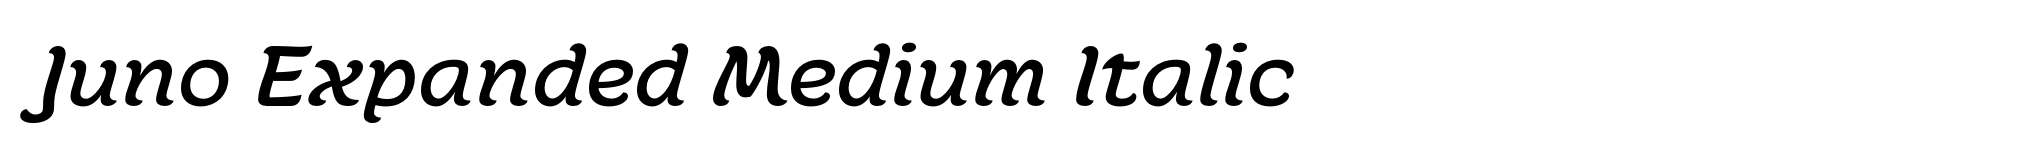 Juno Expanded Medium Italic image